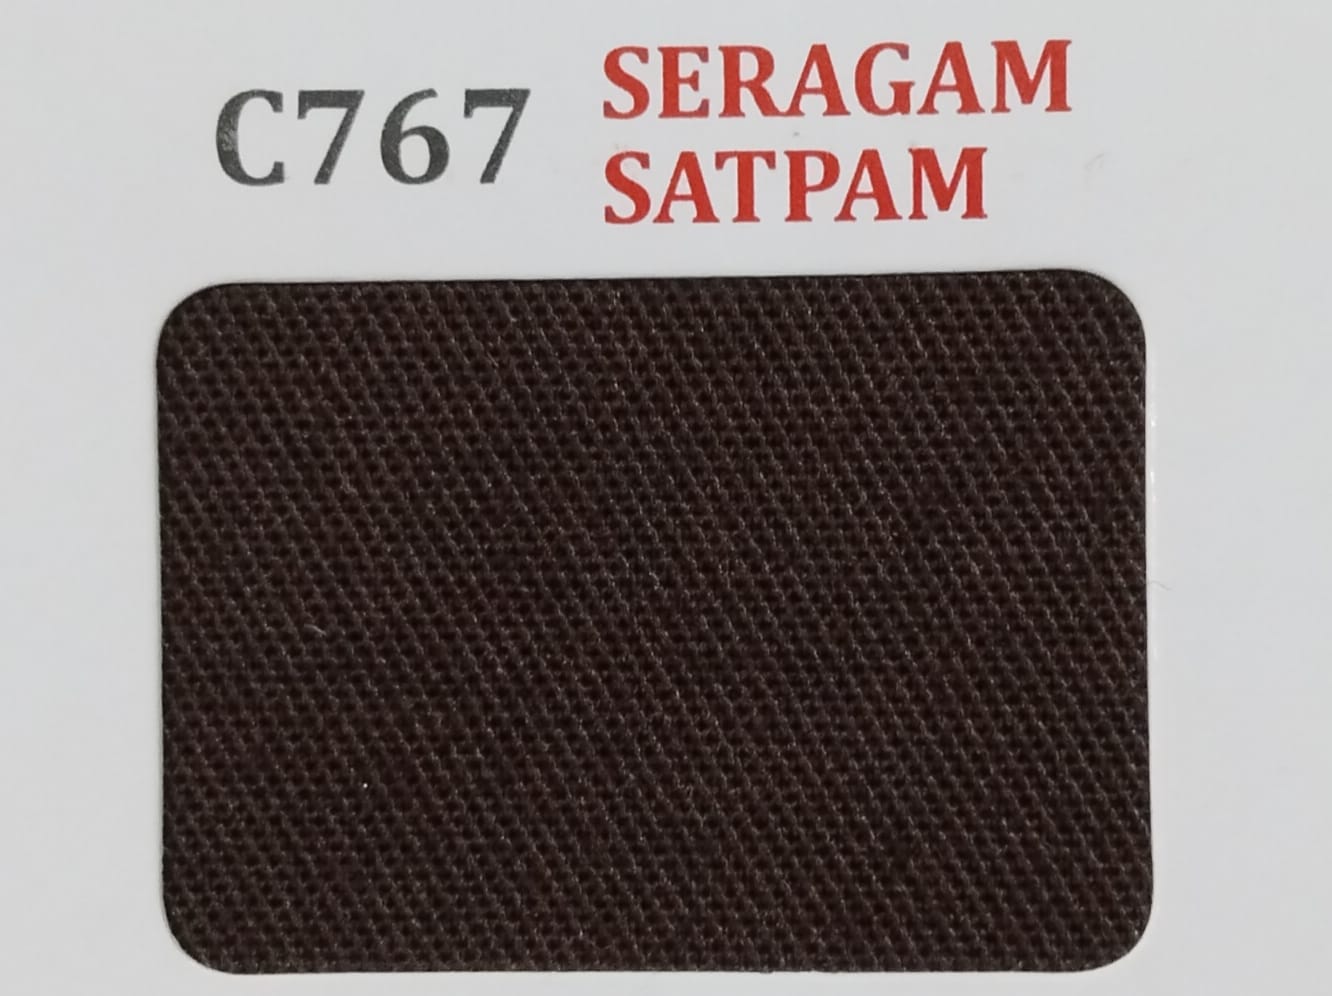 Gambar 1. Unione Kode C767 Warna Coklat Seragam Satpam Part 1